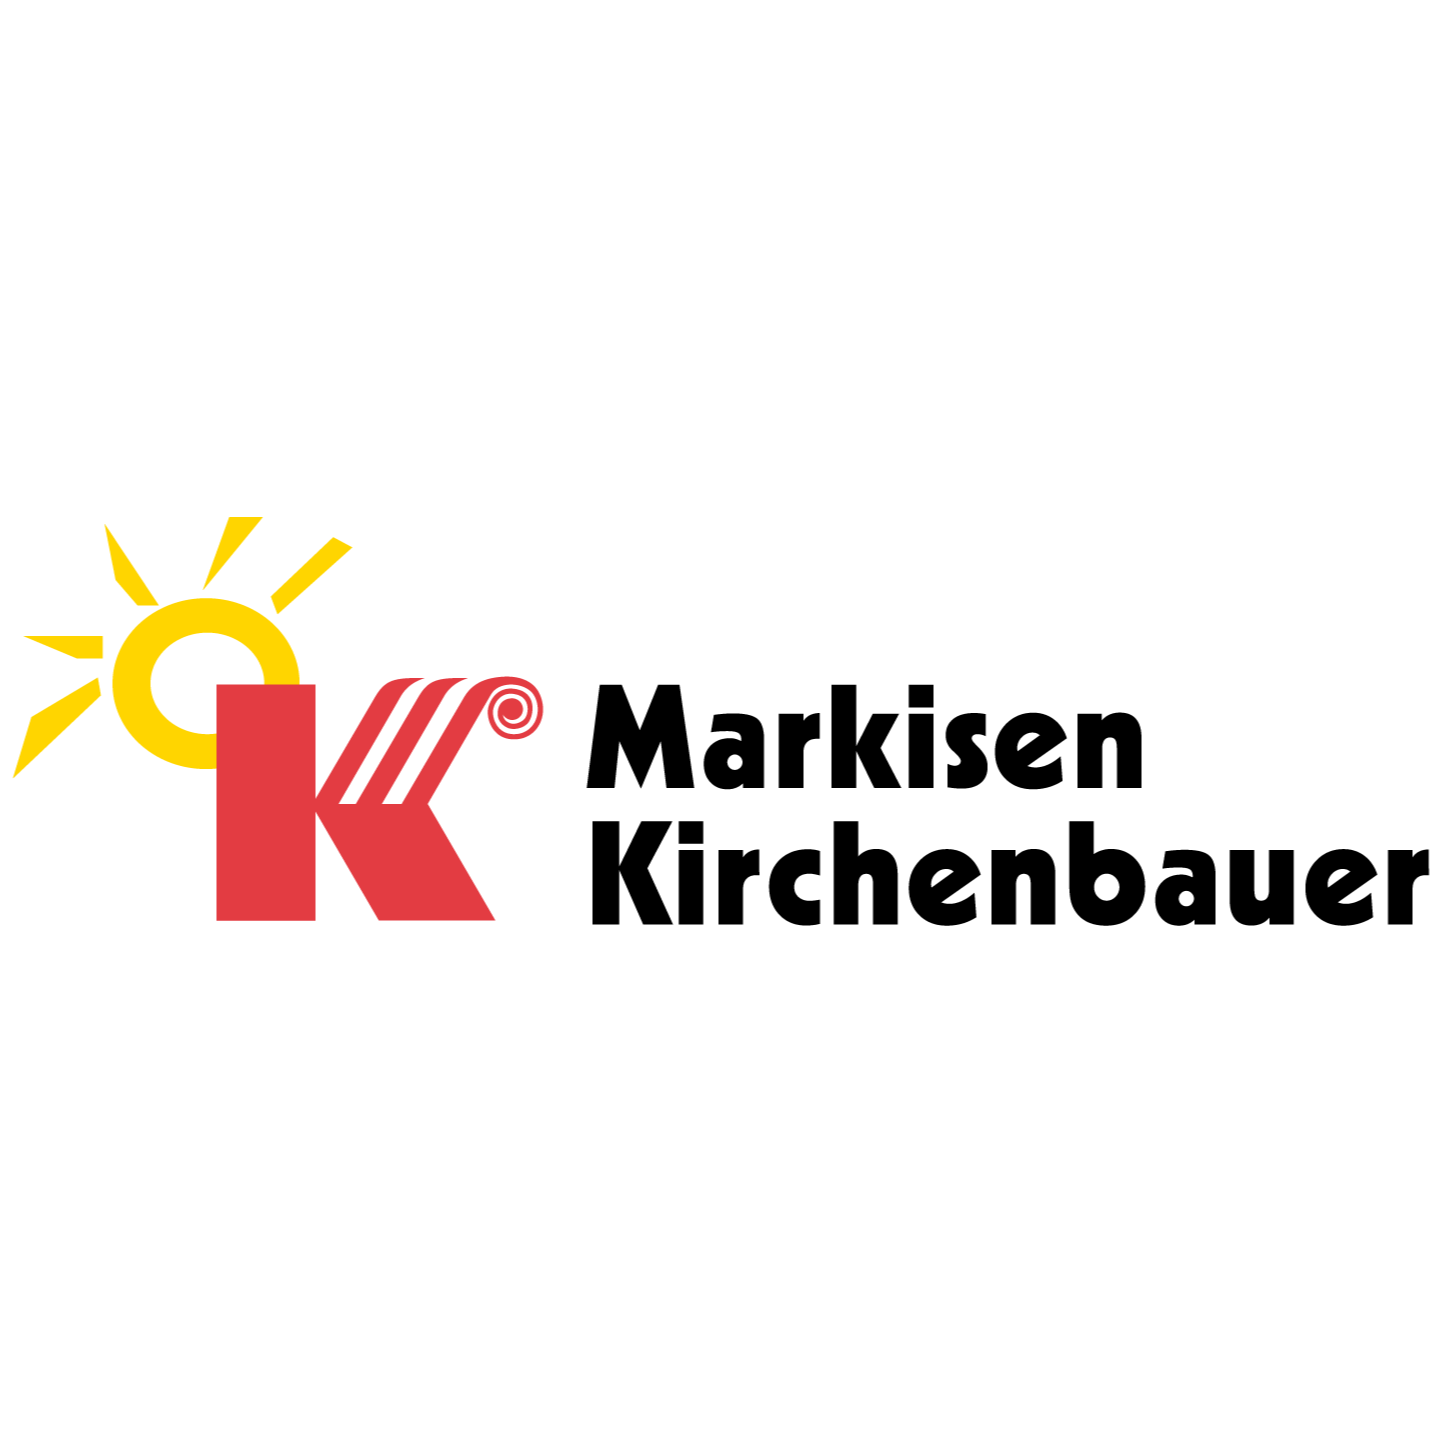 Markisen Kirchenbauer Logo